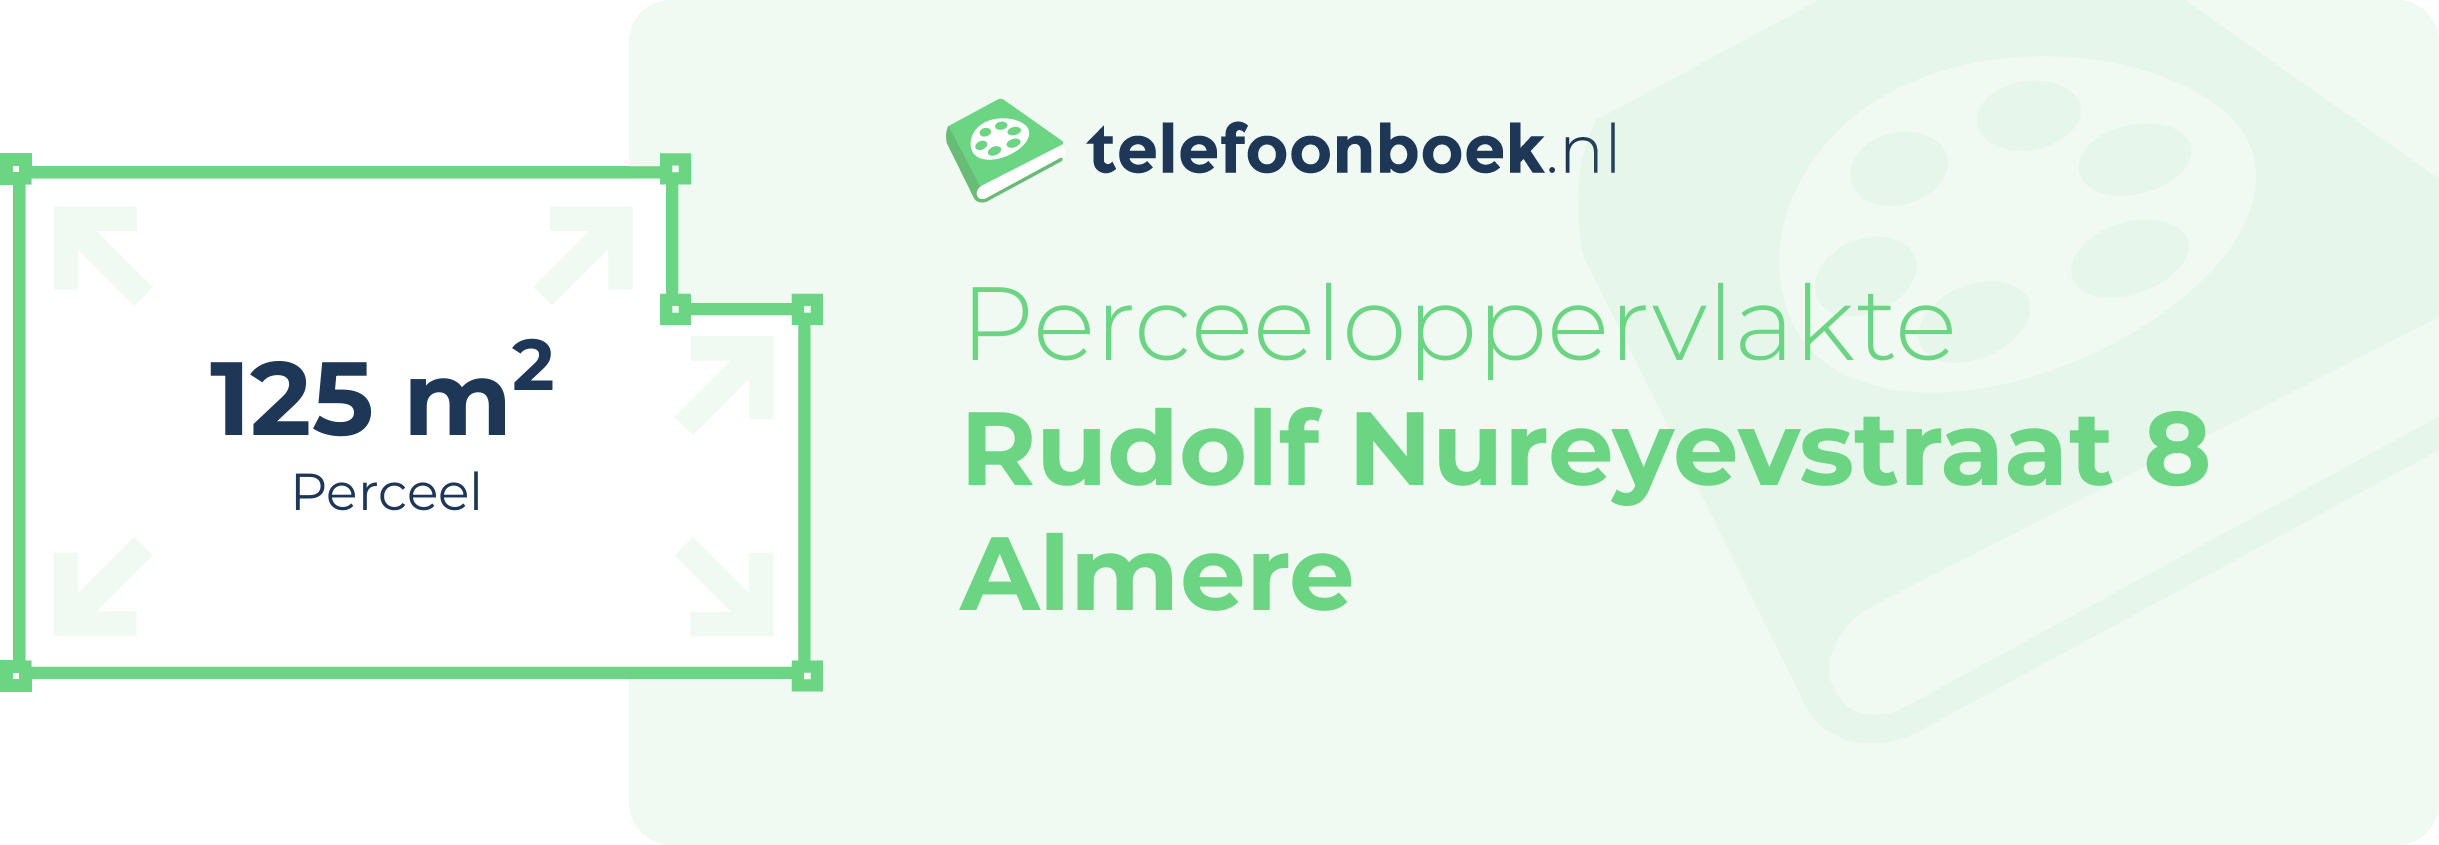 Perceeloppervlakte Rudolf Nureyevstraat 8 Almere